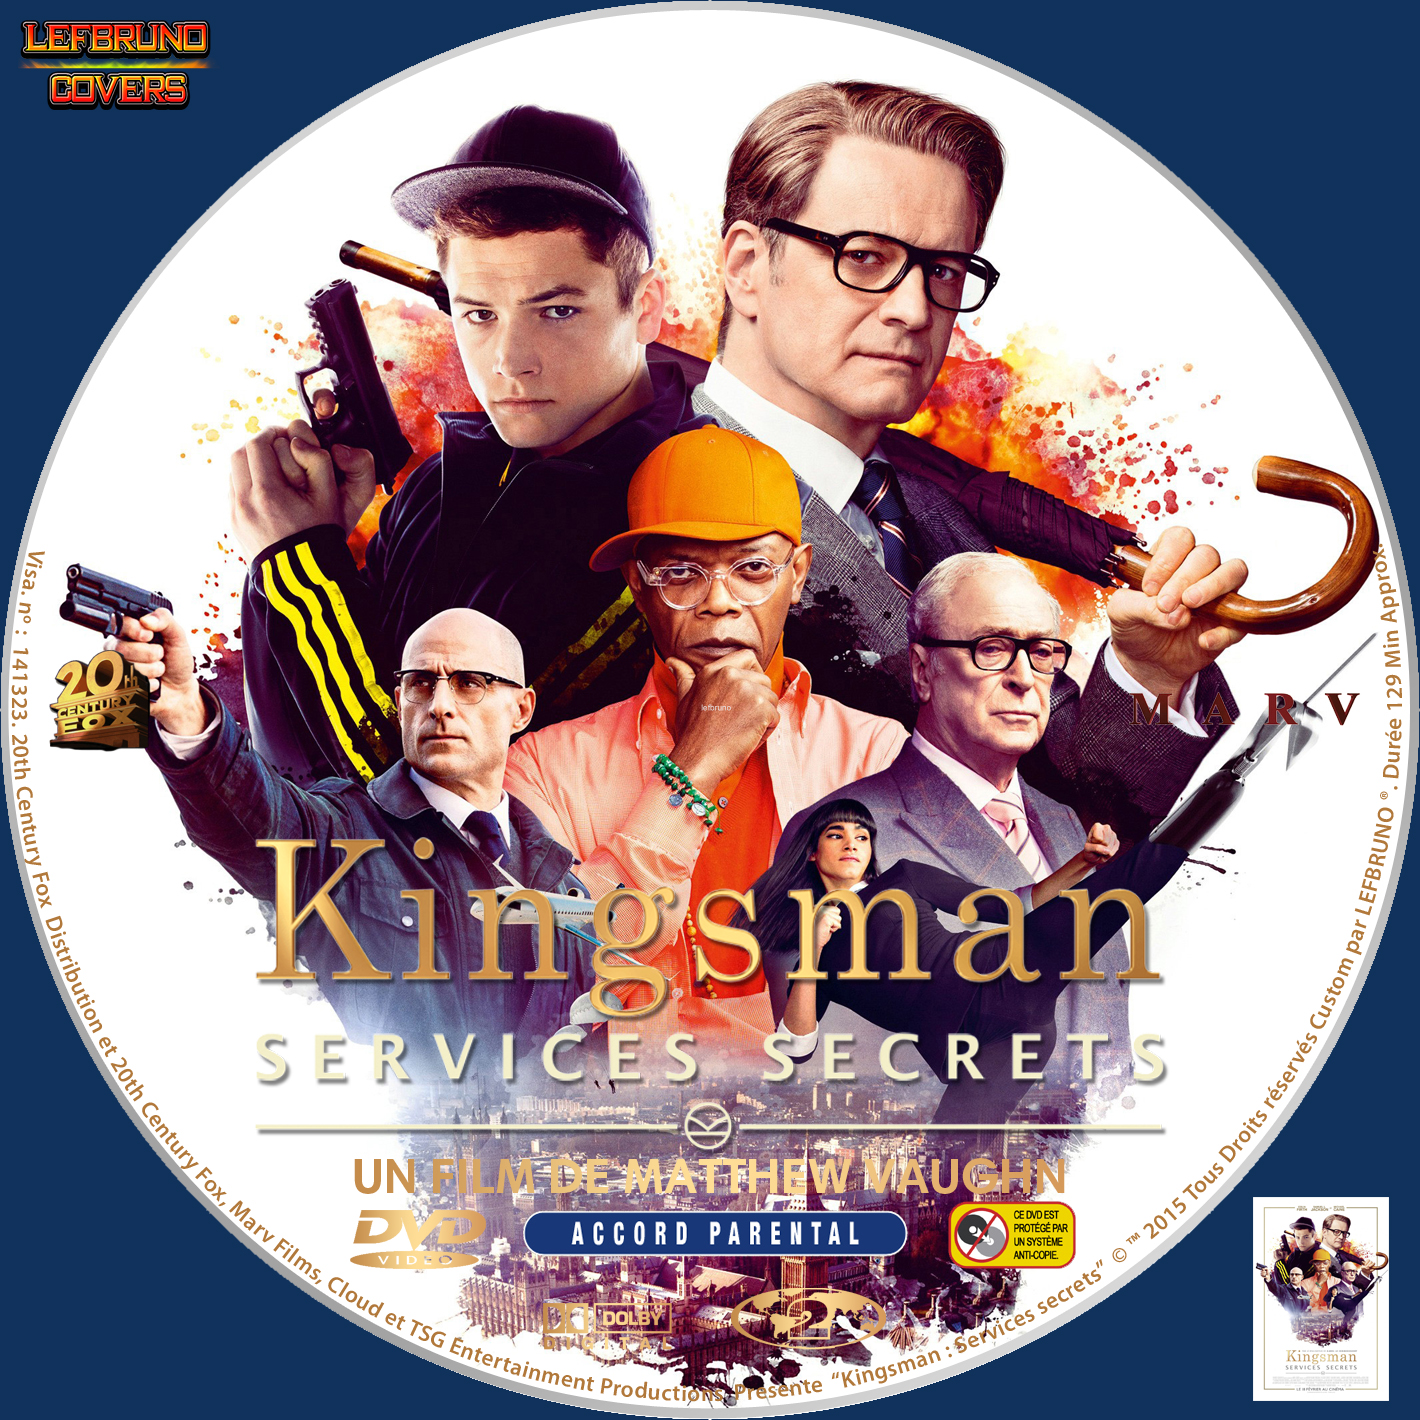 Kingsman Services Secrets custom